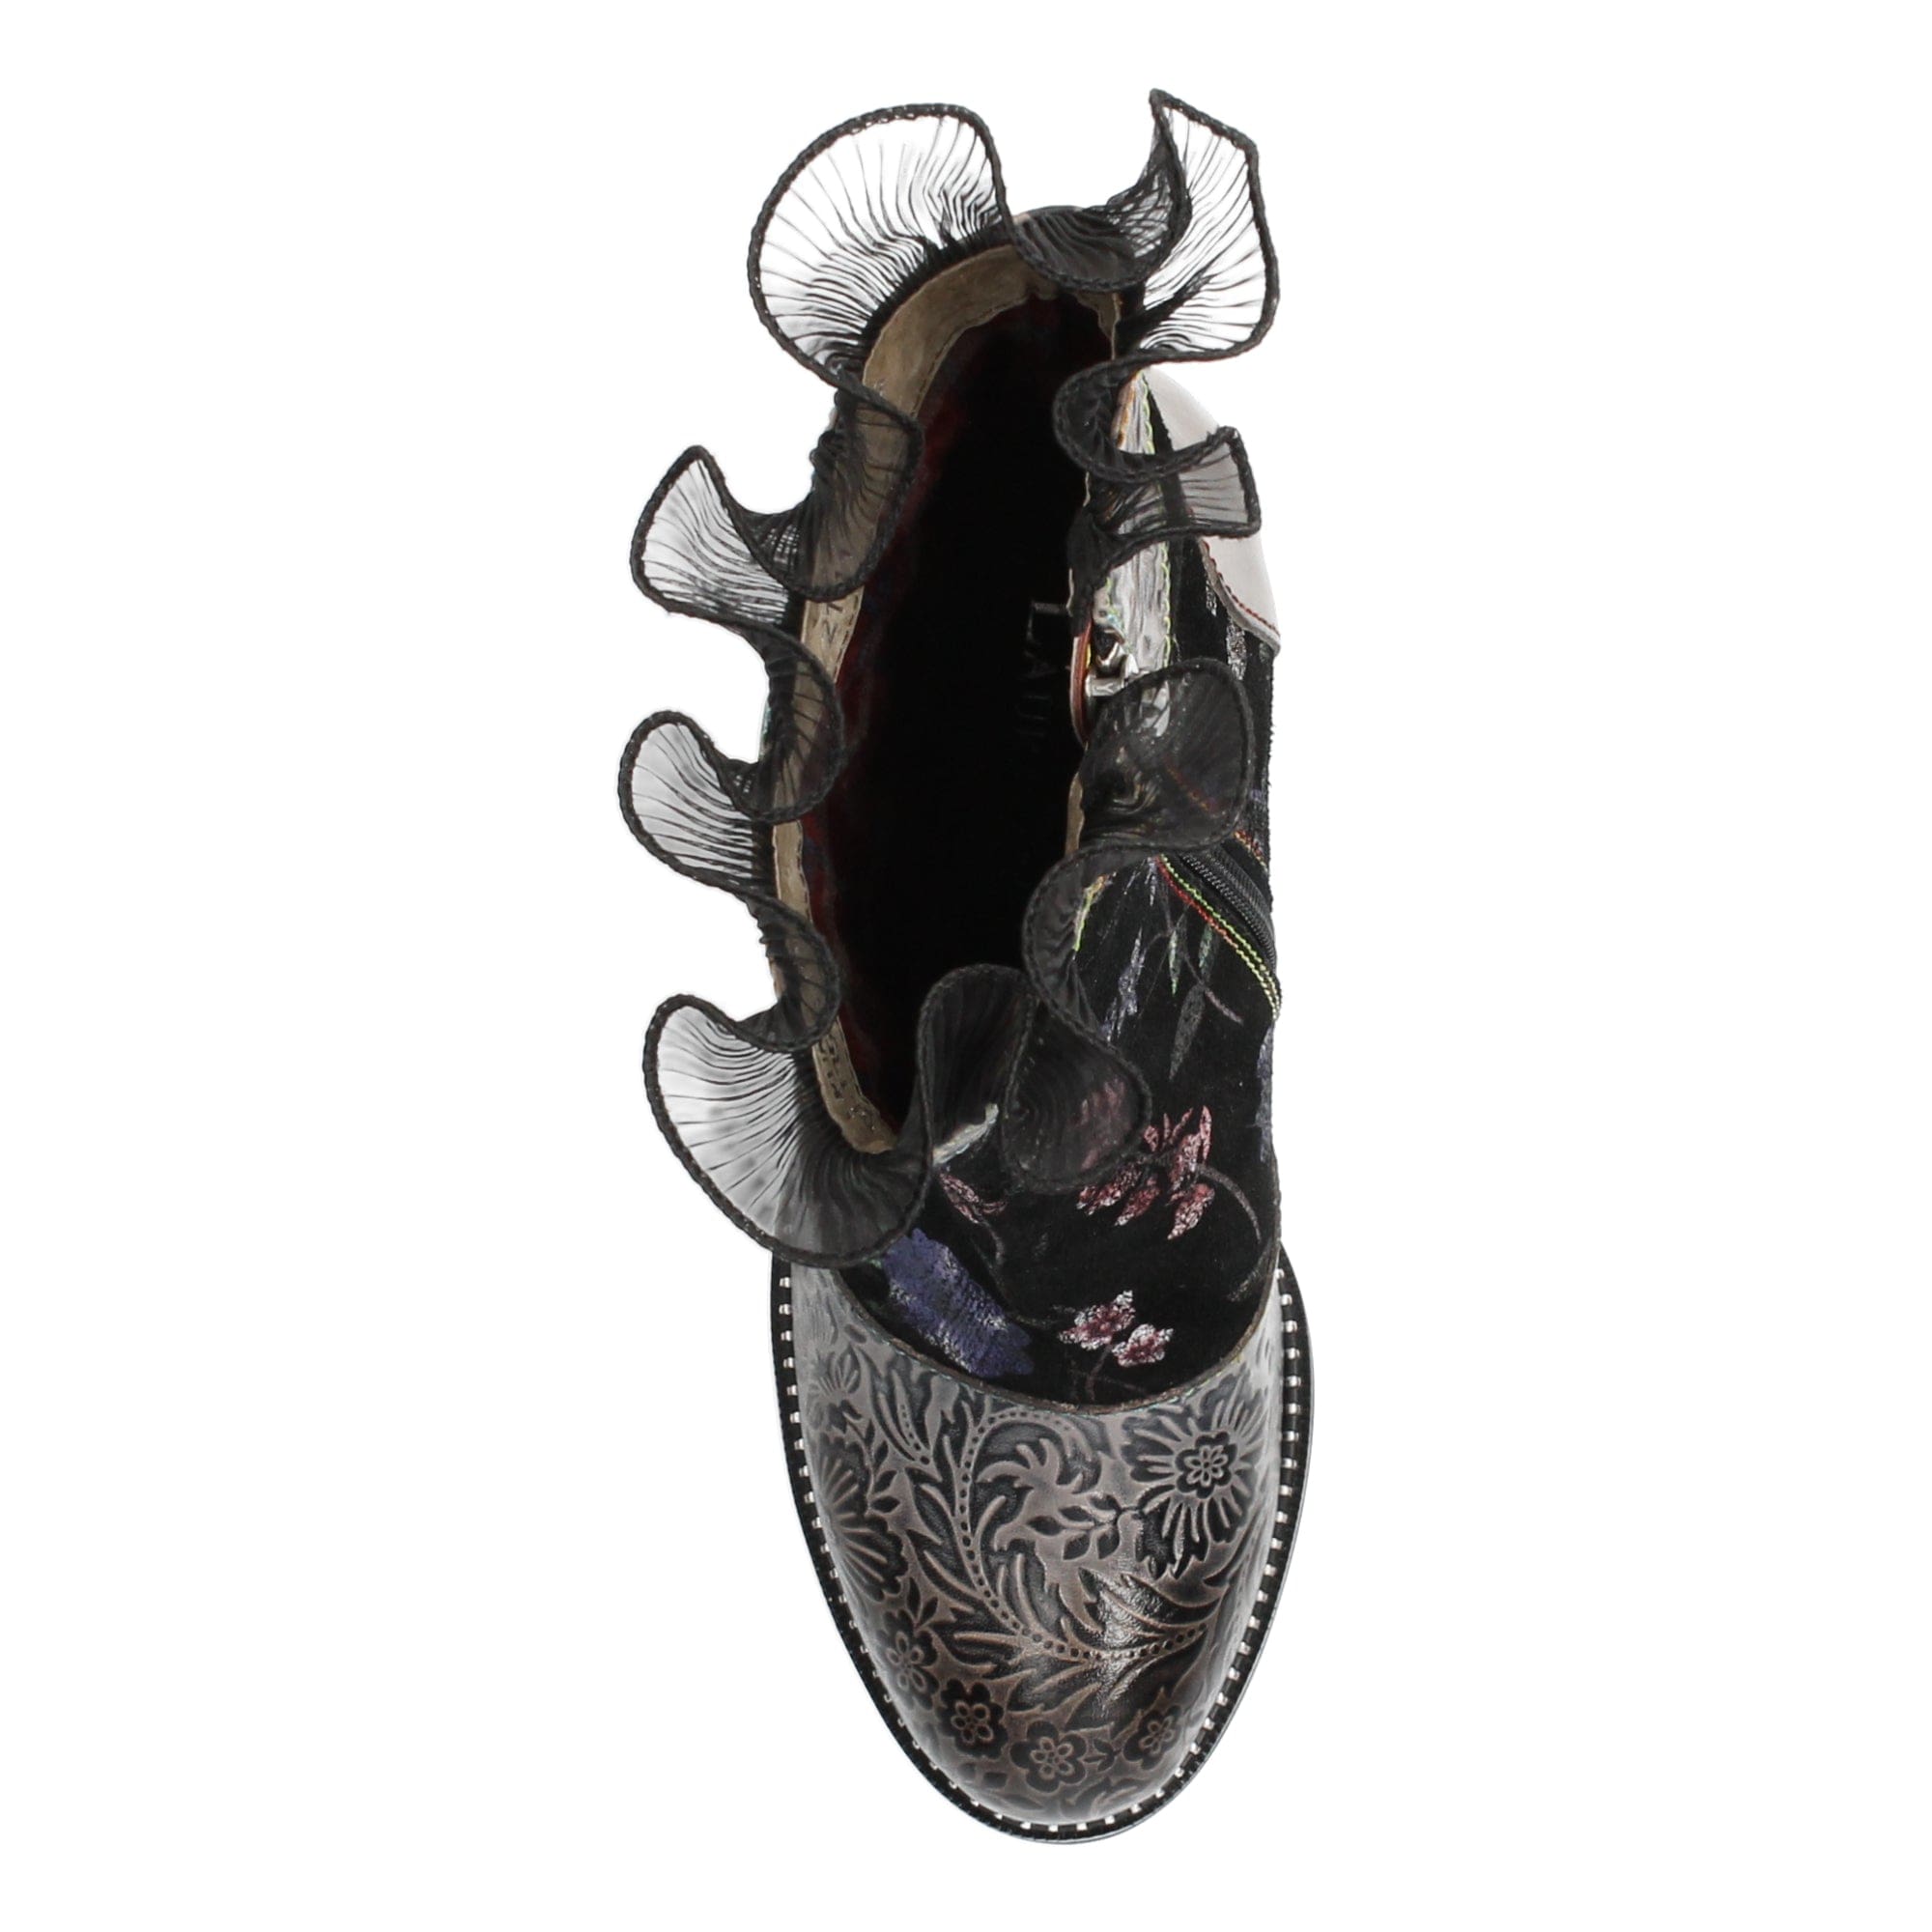 Chaussure LEDAO 01 - Boots